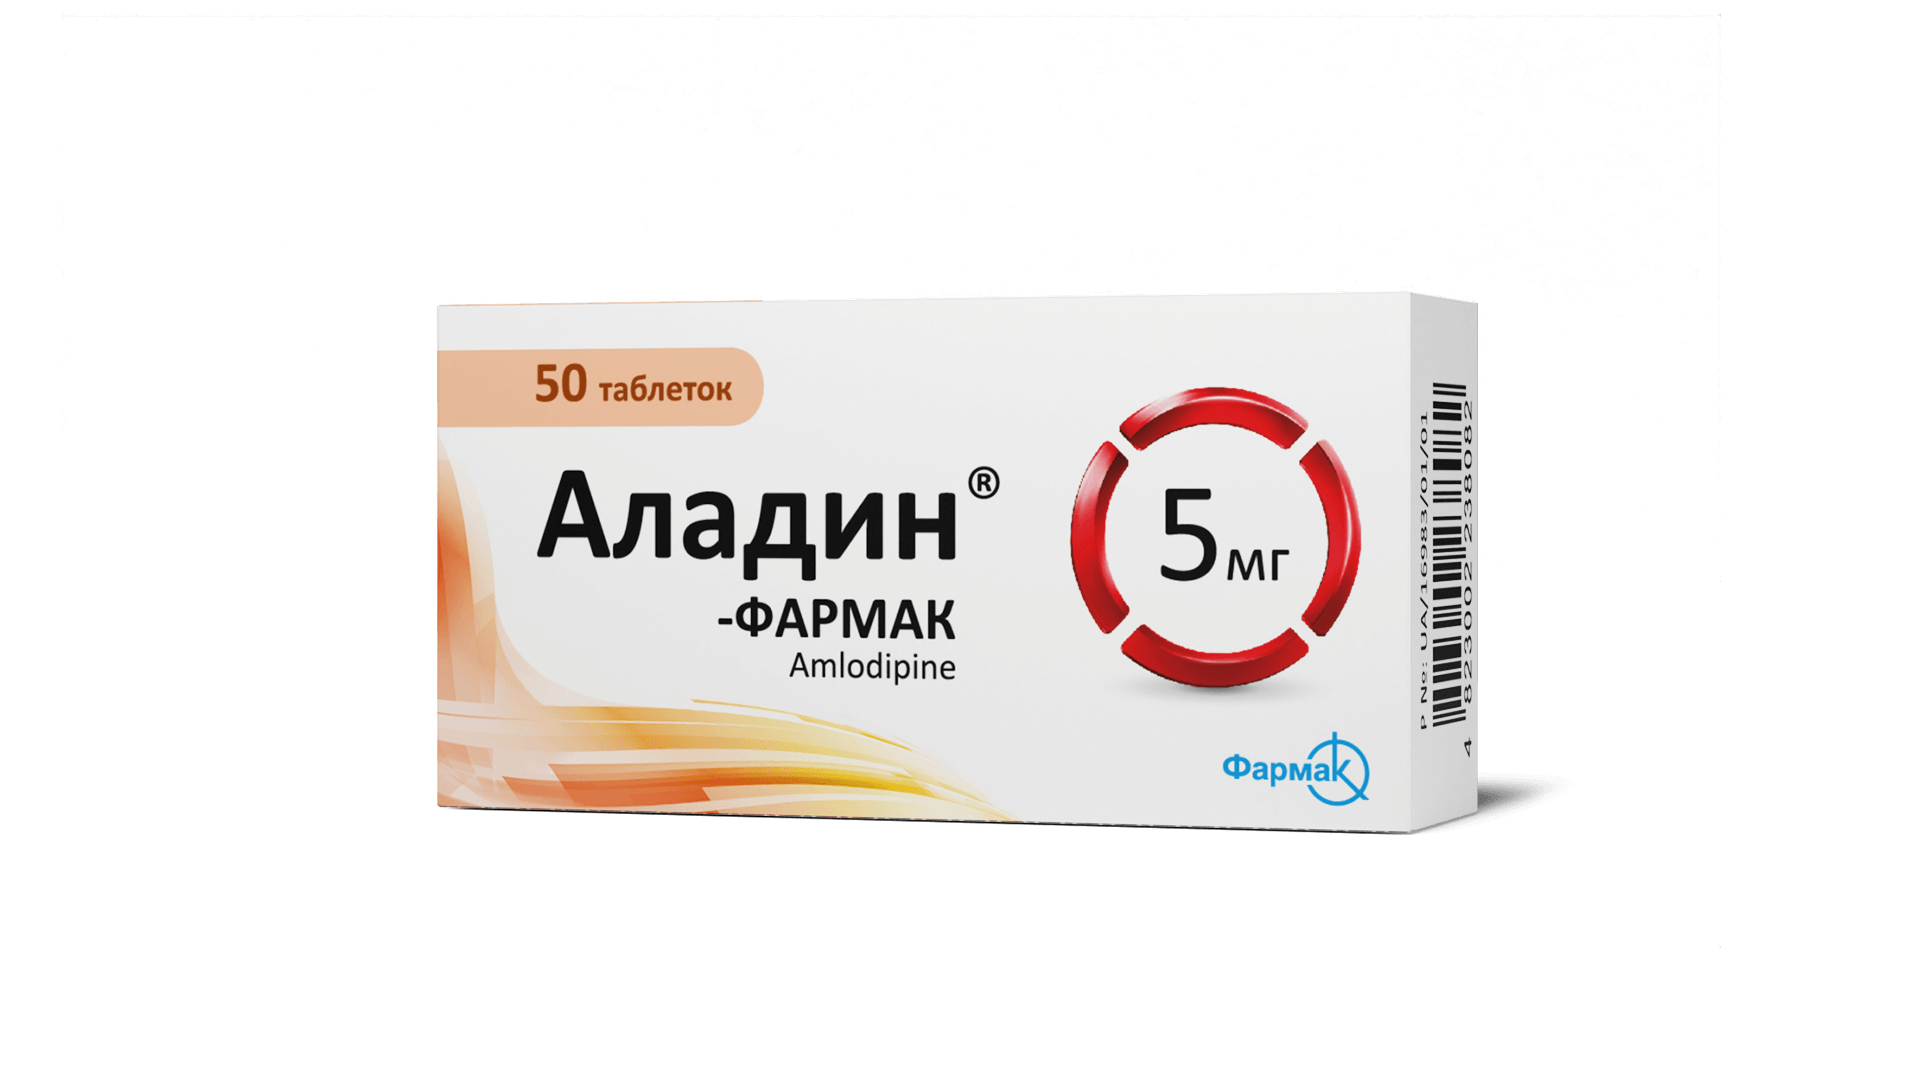 Аладин – Фармак 5 мг (6)